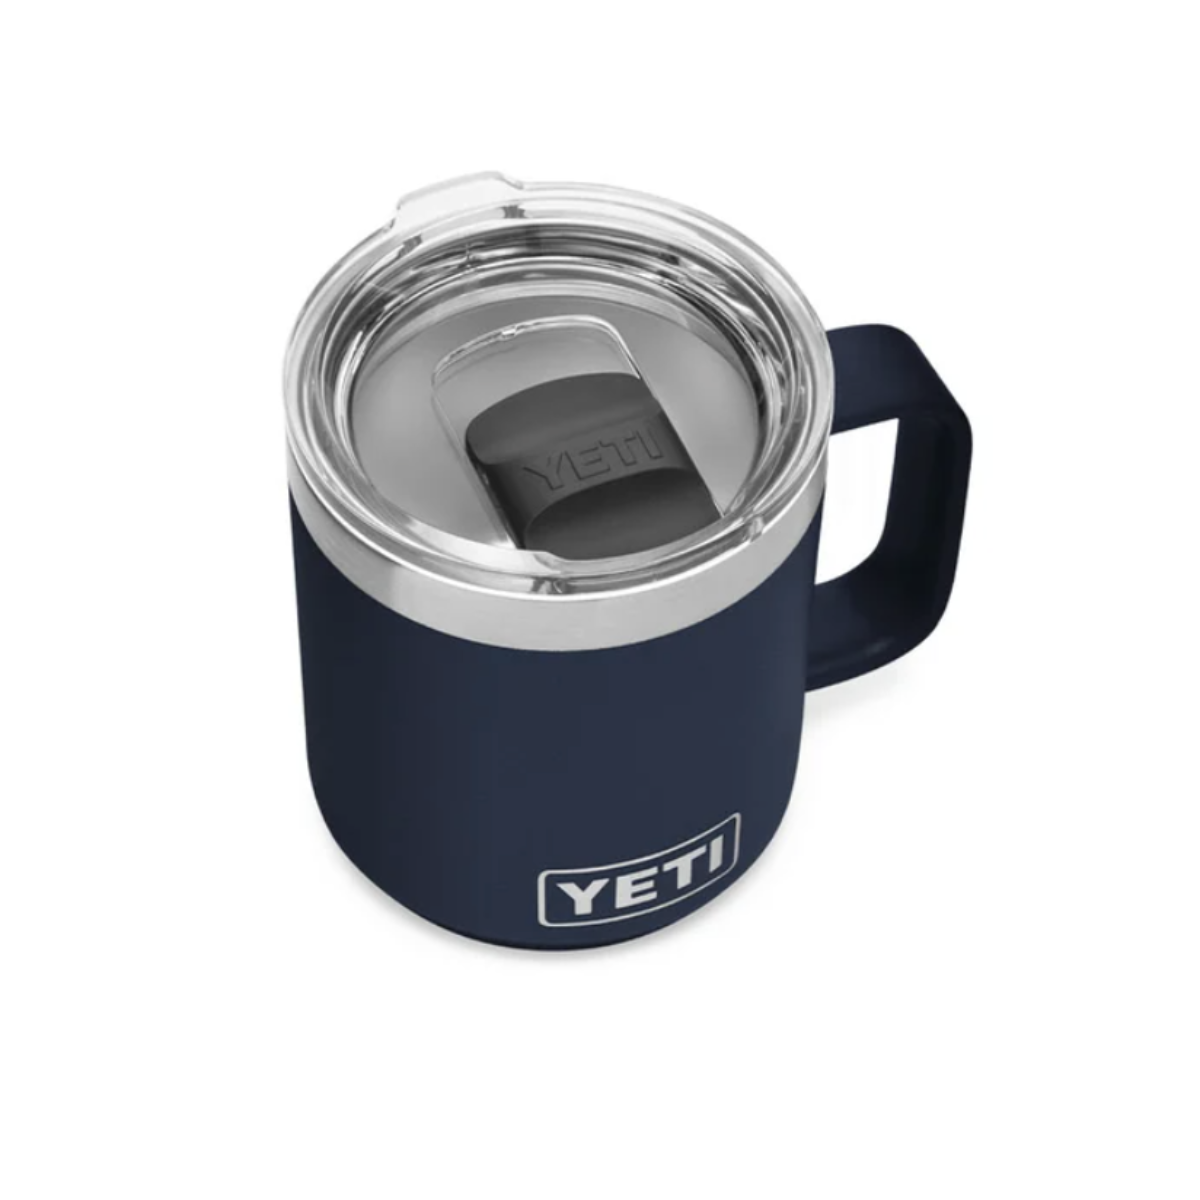 Yeti Rambler 21071501046 Stackable Mug, 10 oz Capacity, M